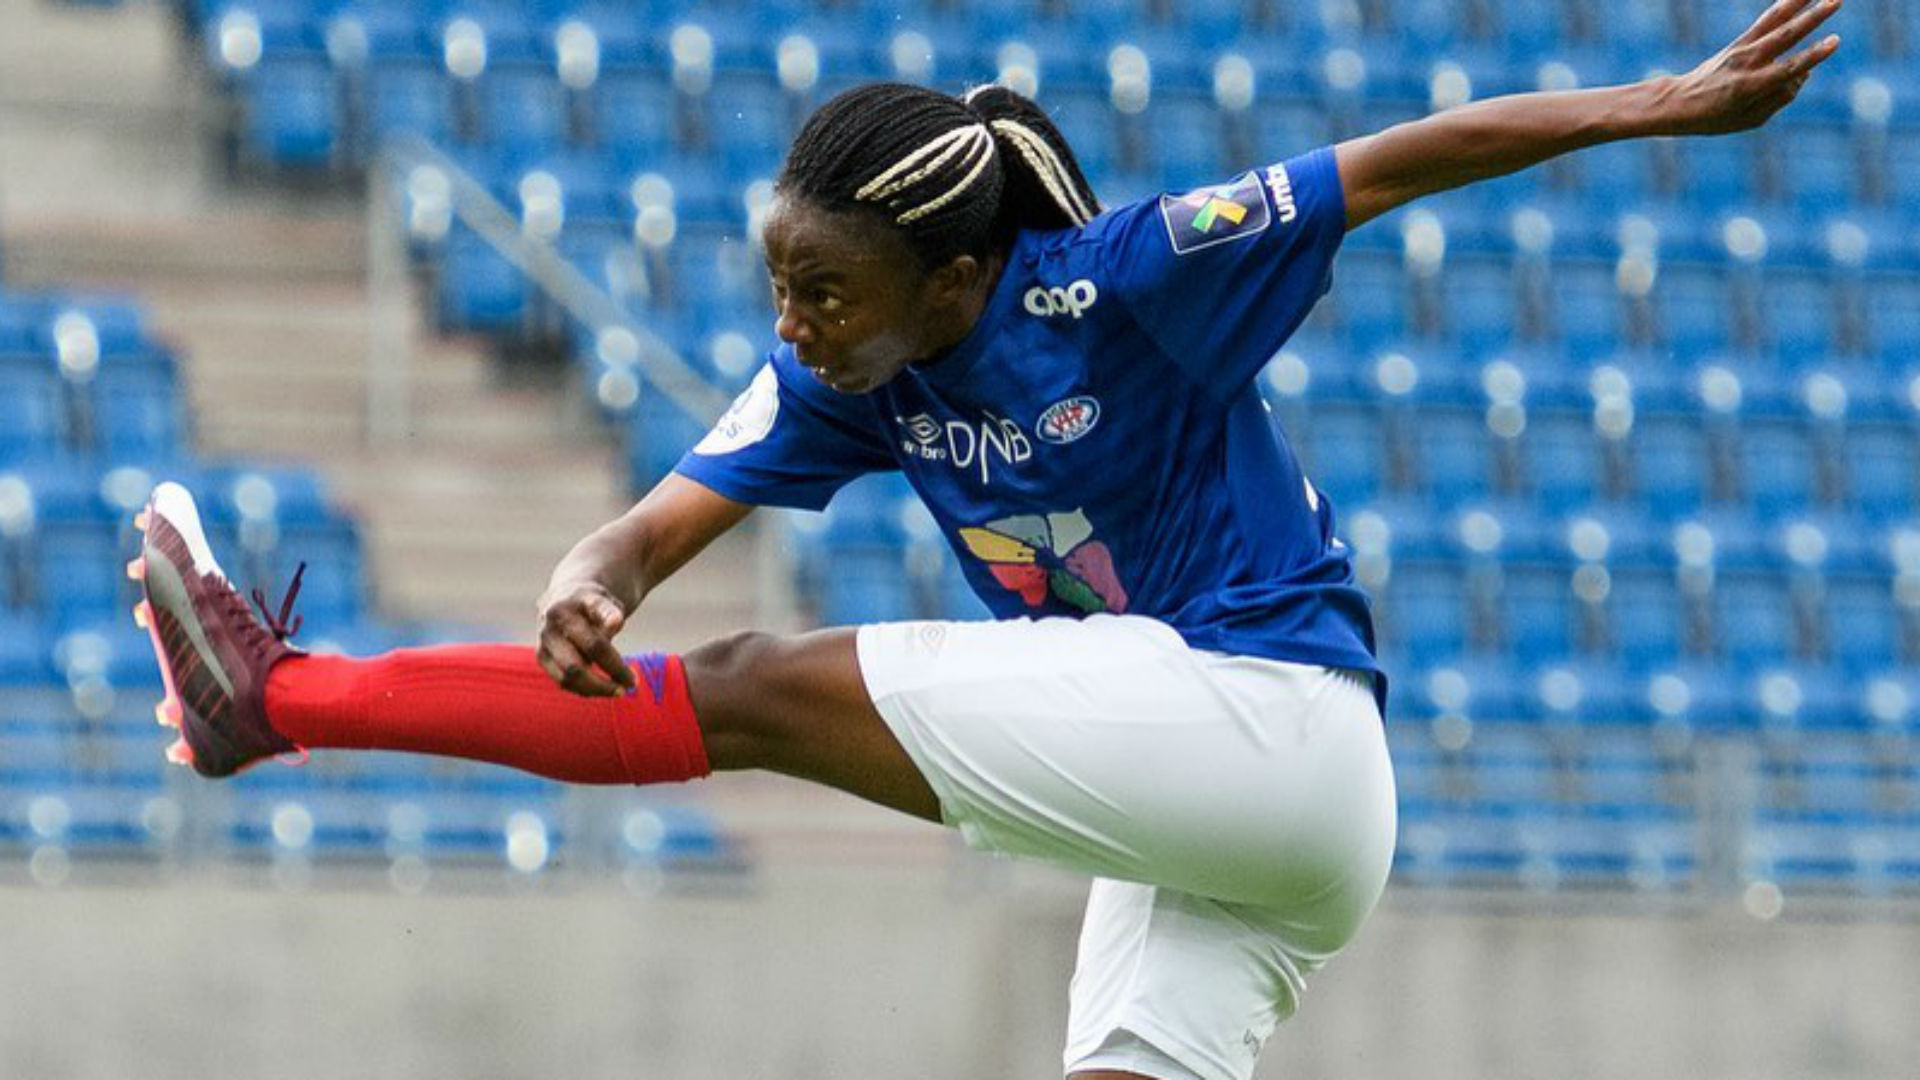 Cameroon striker Nchout's brace leads to Valerenga win over Arna-Bjornar